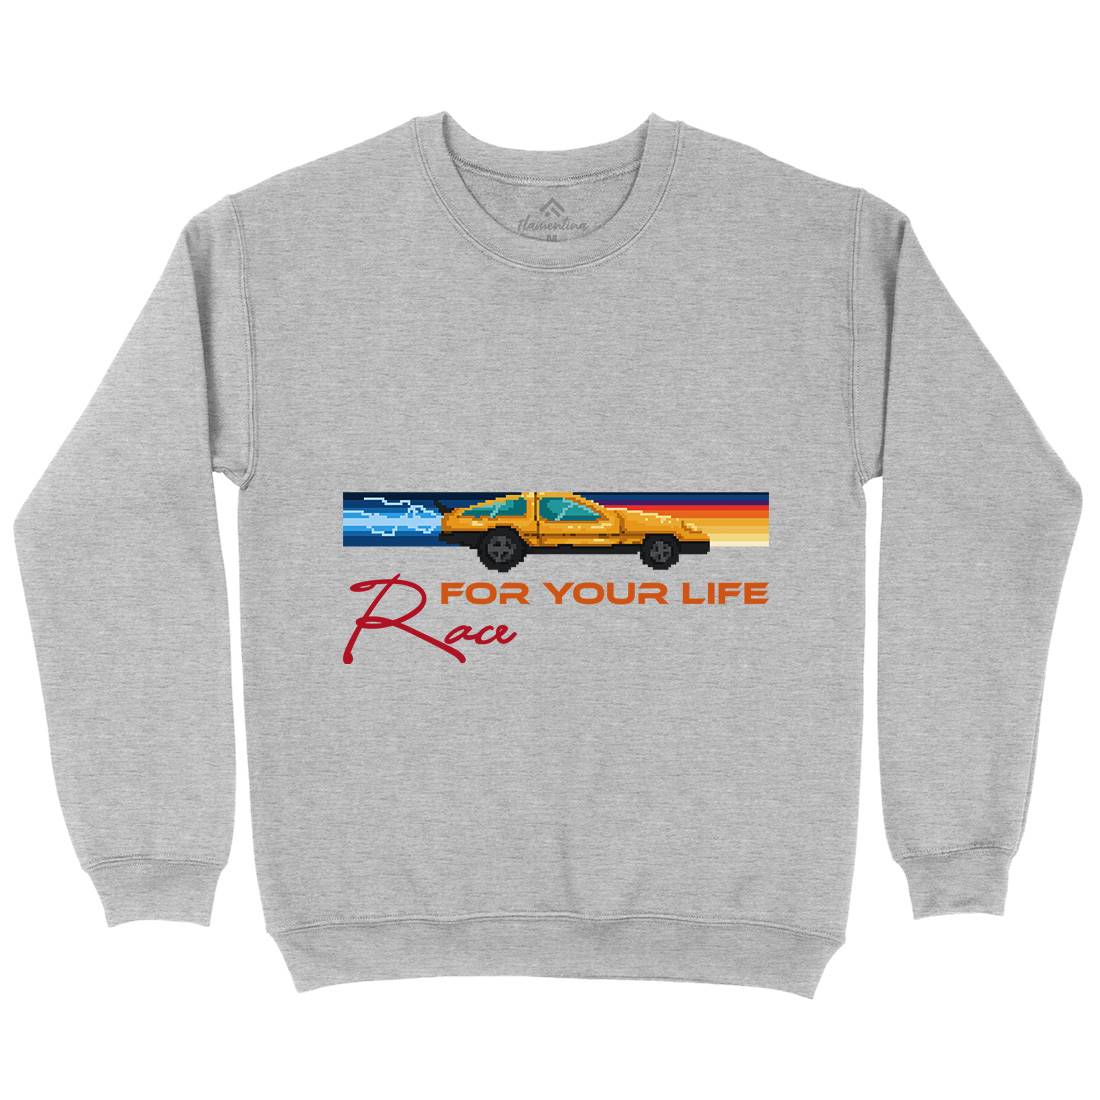 Race For Your Life Mens Crew Neck Sweatshirt Cars B951